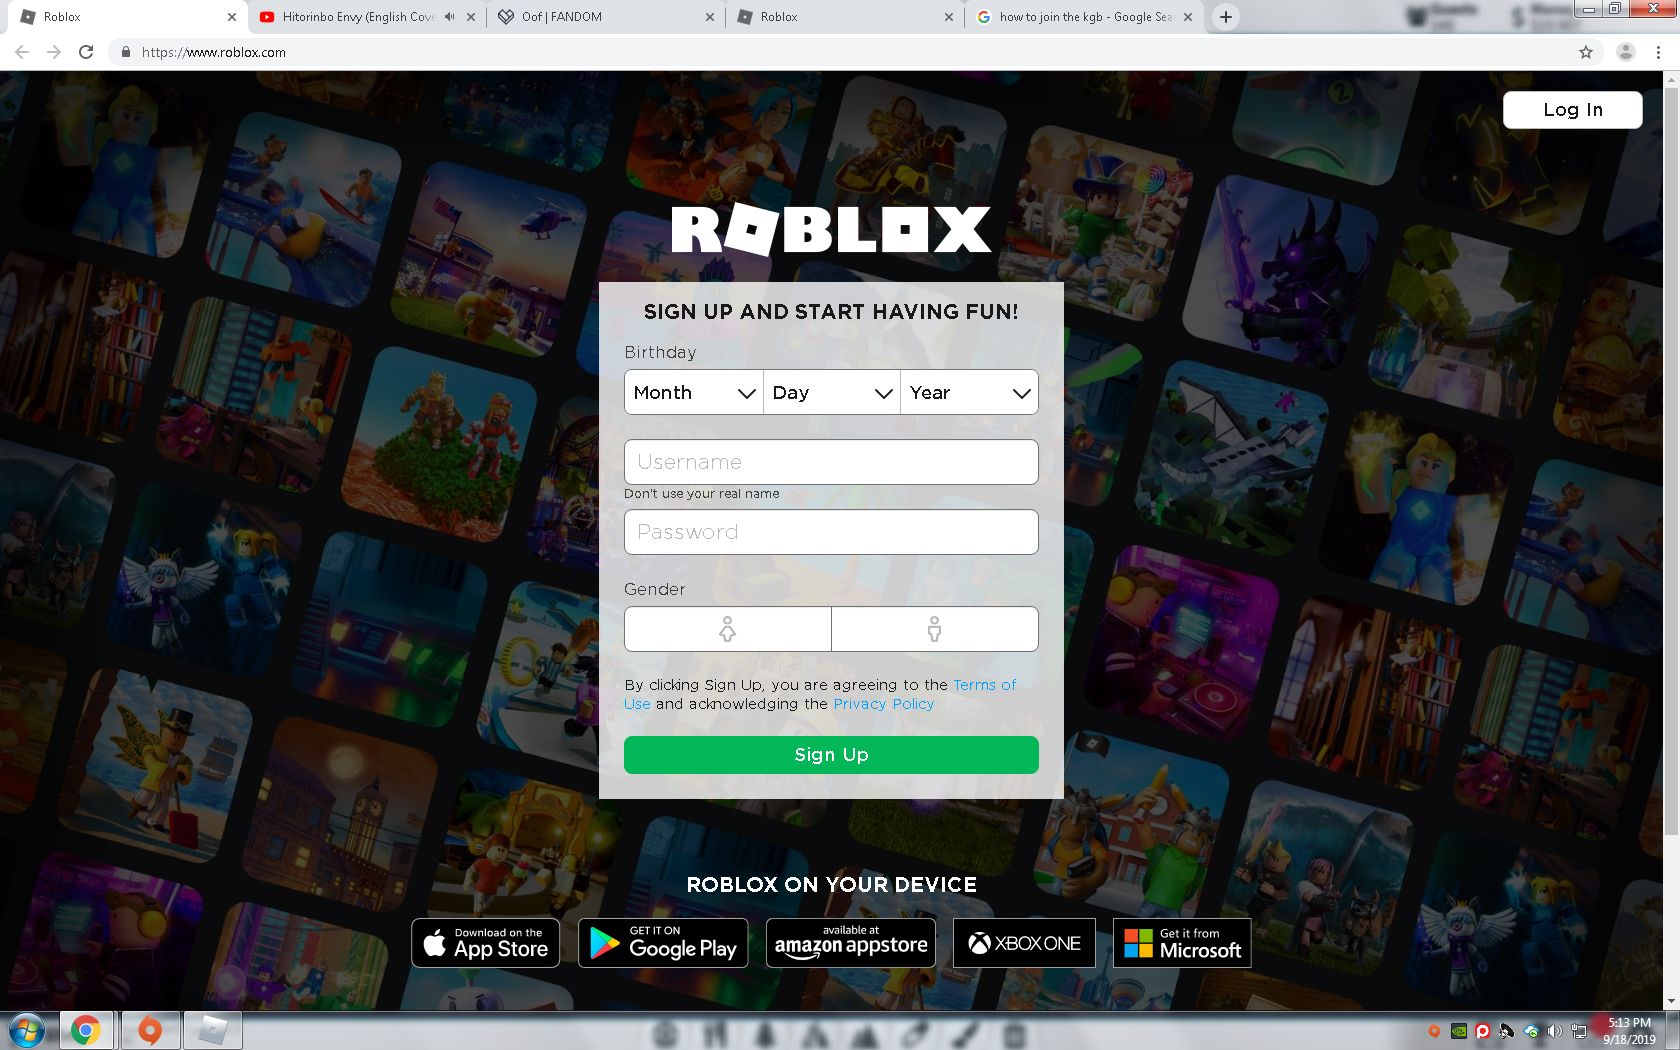 Roblox Amazon App Store Upgrade